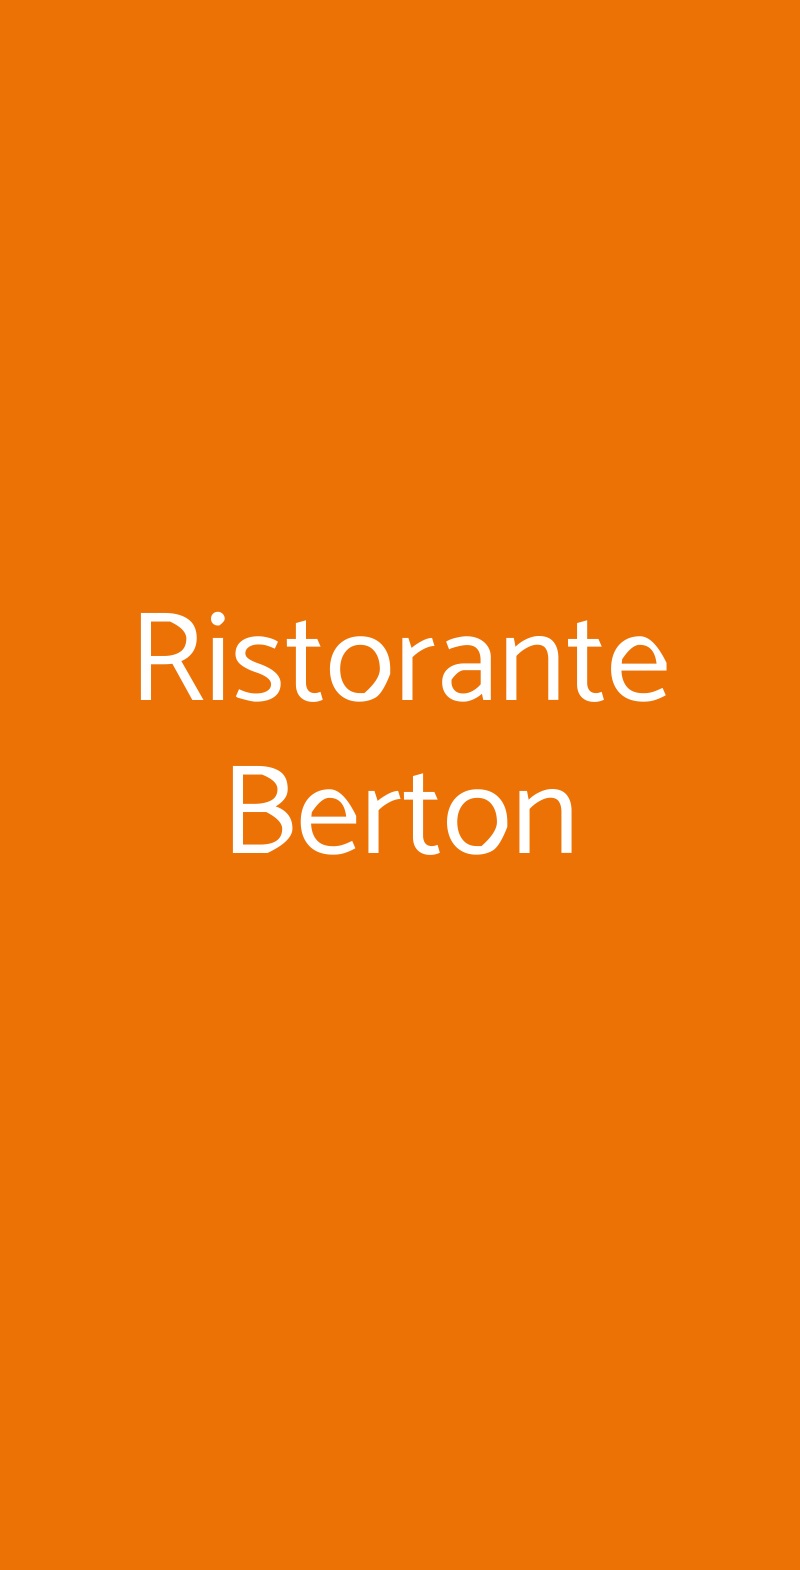 Ristorante Berton Milano menù 1 pagina